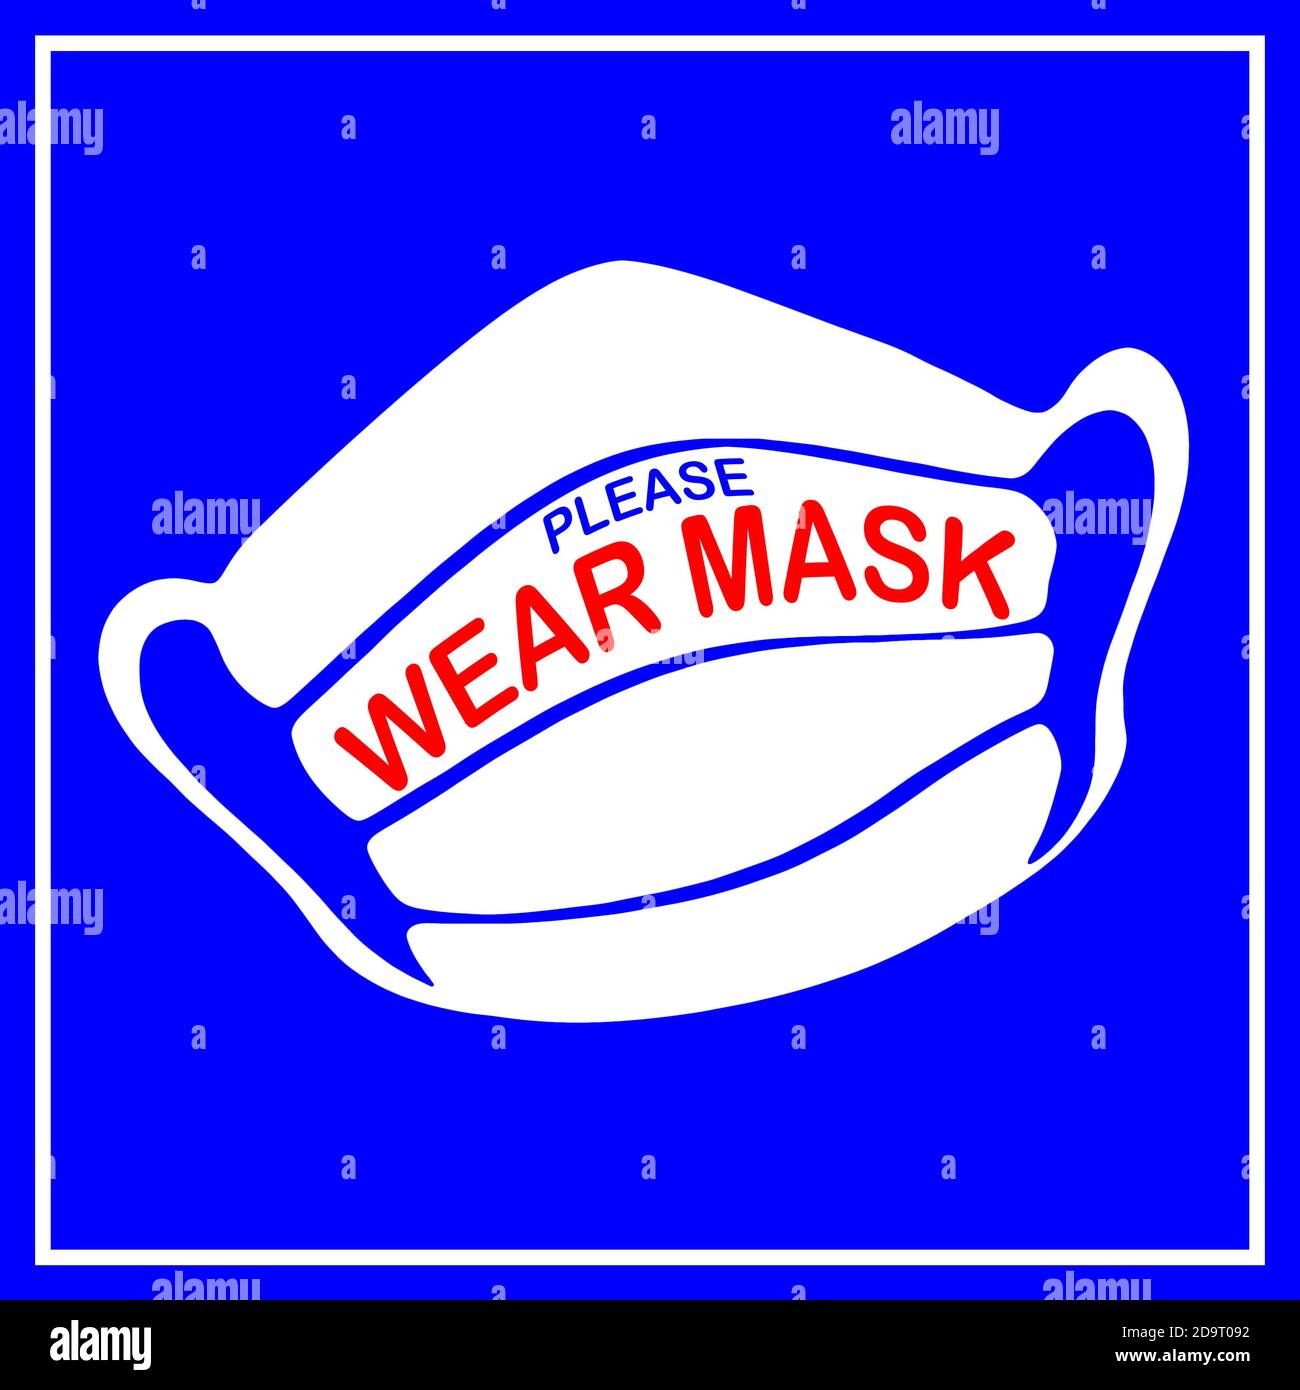 White Face Mask against blue background Stock Photo